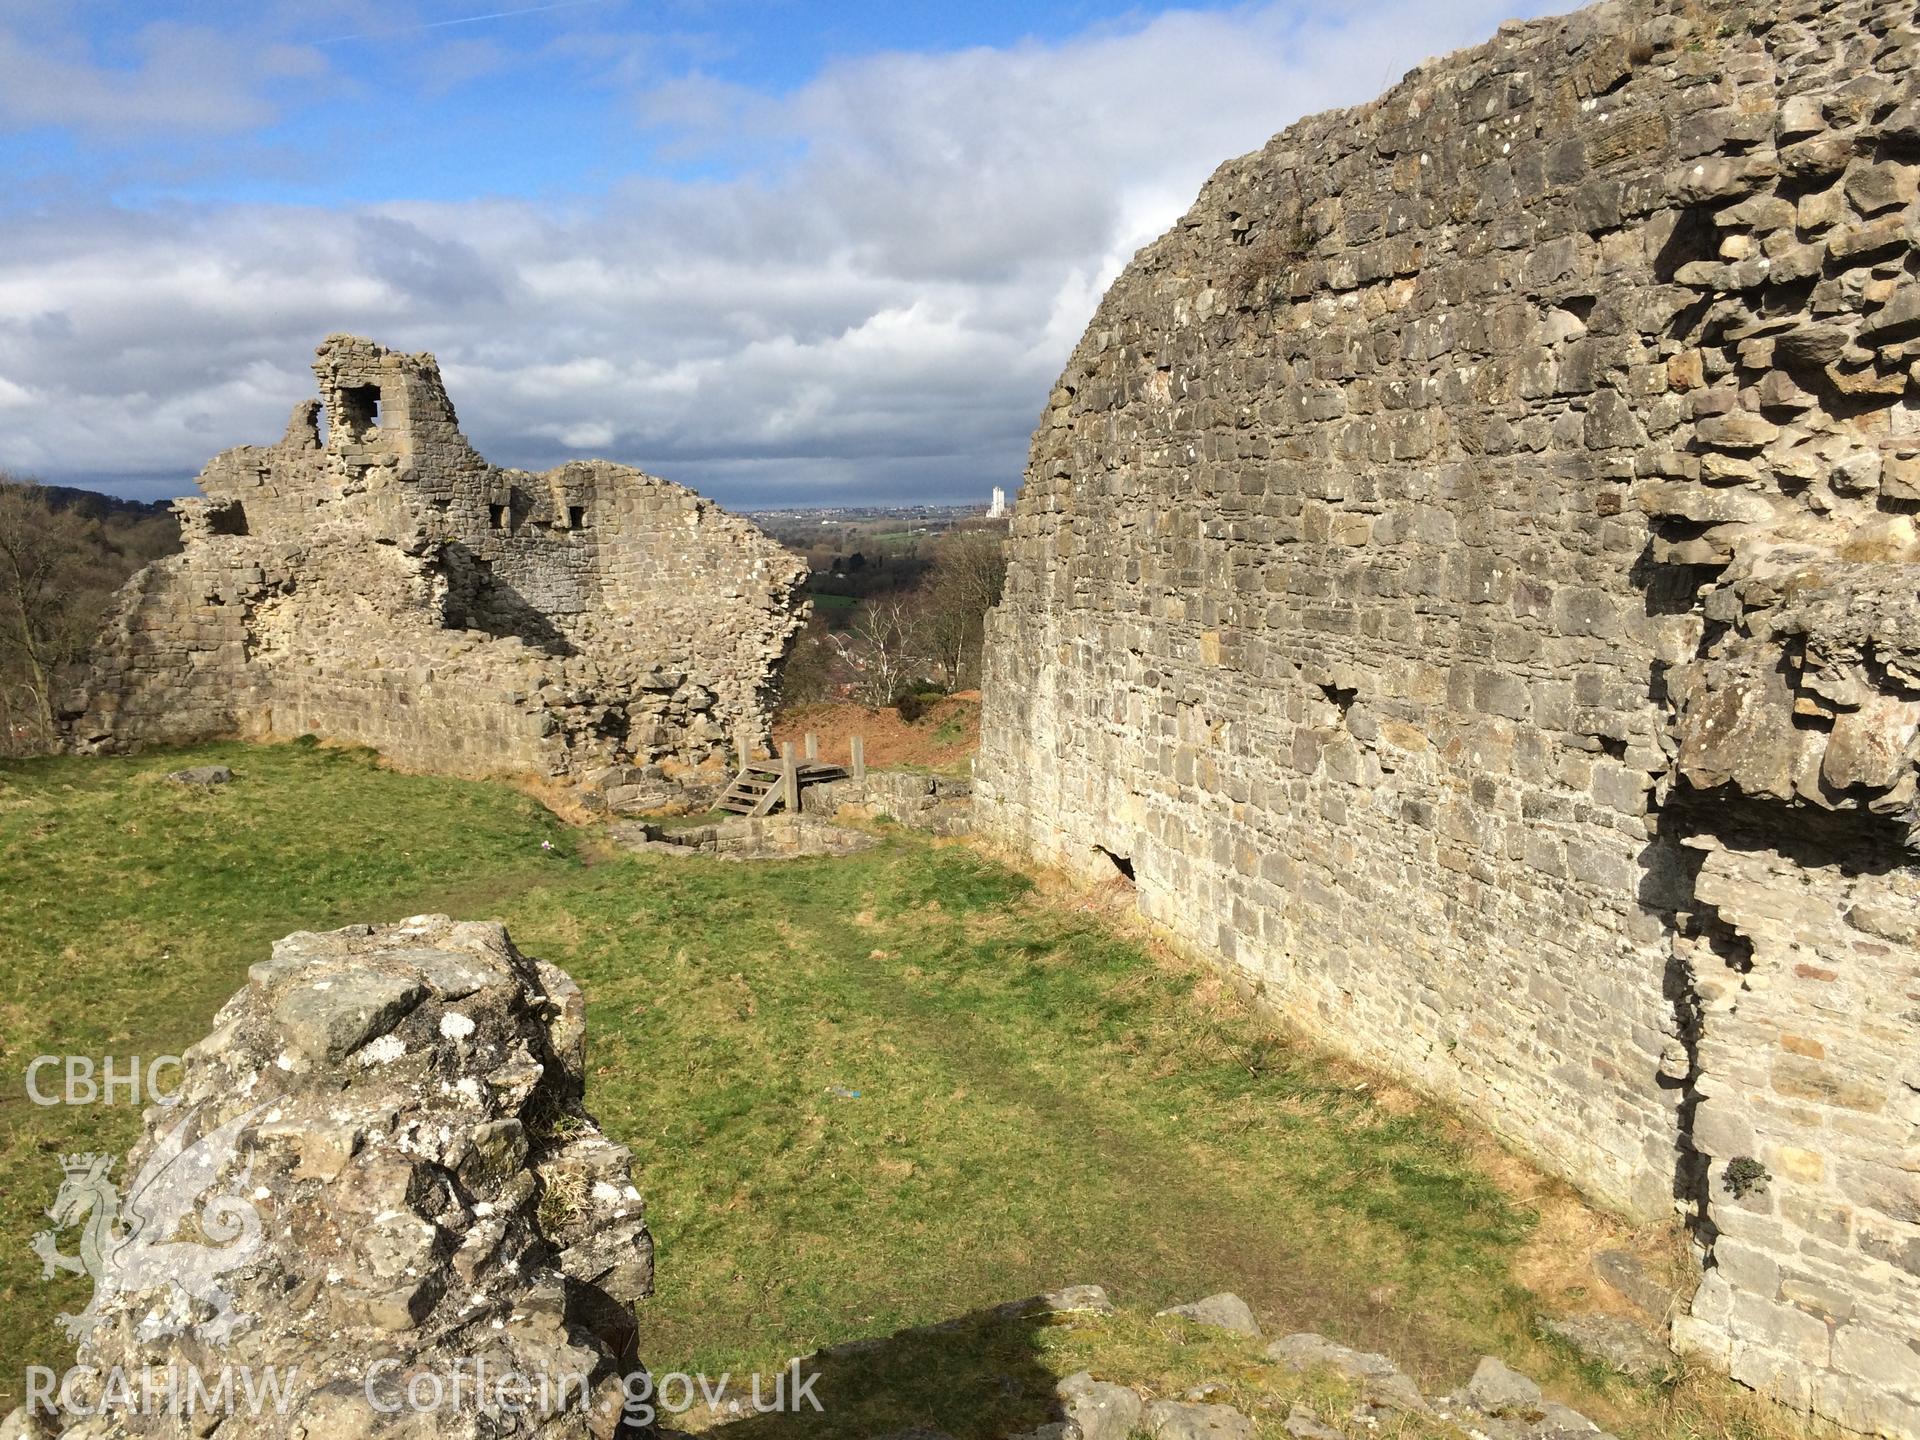 Colour photo showing Caergwrle Castle, produced by  Paul R. Davis,  13th March 2017.